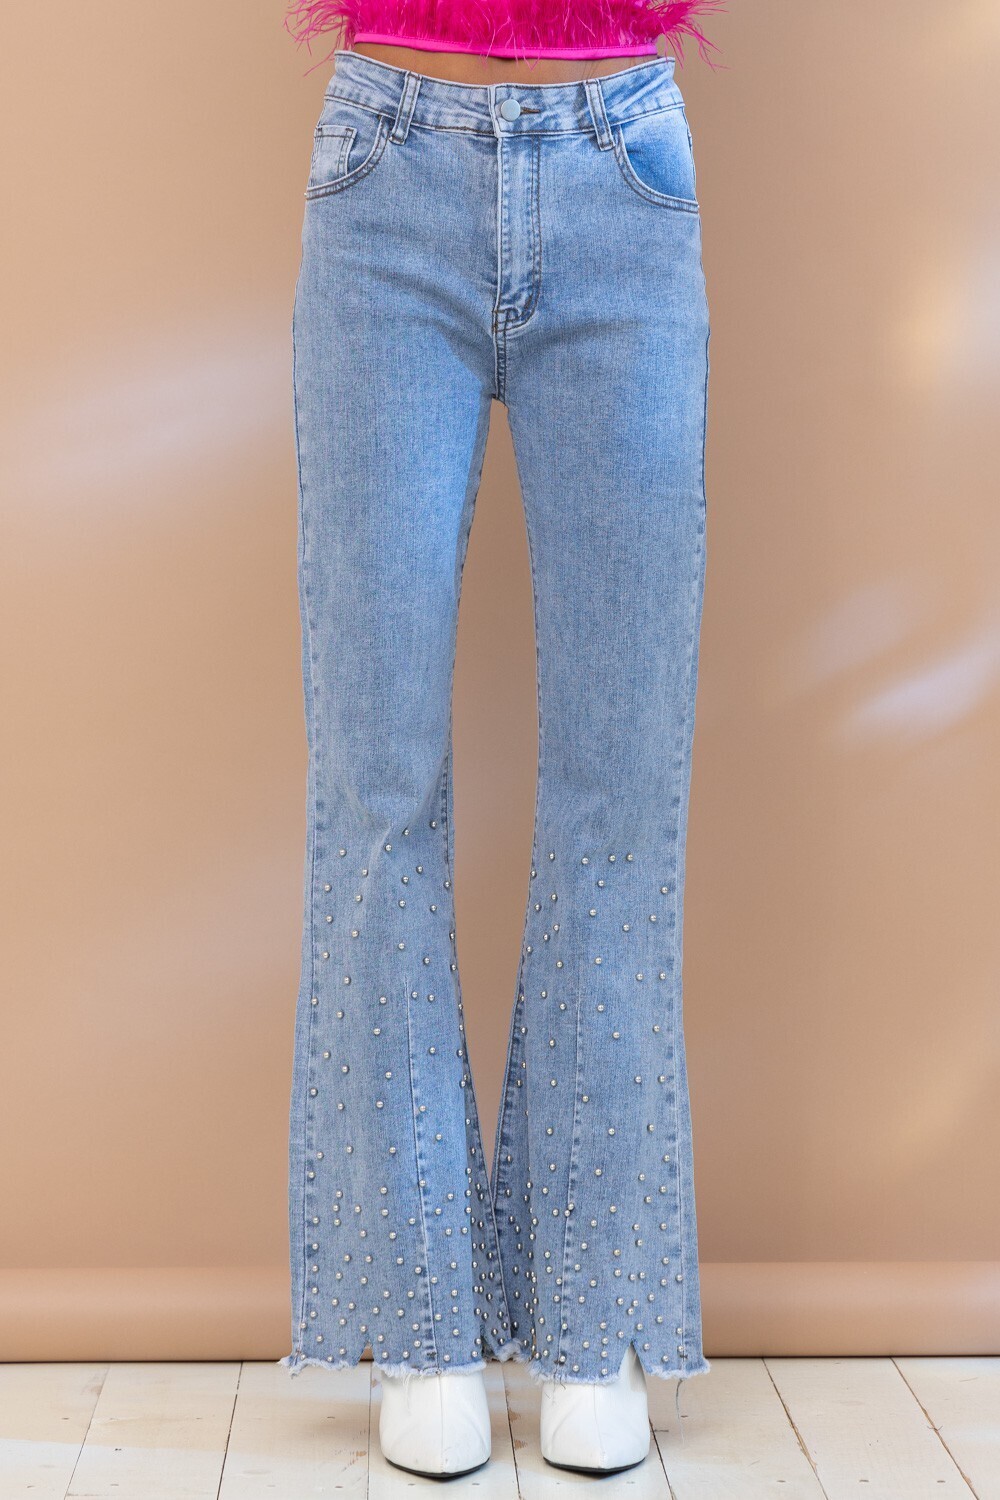 Distressed Studded Bell Bottom Denim Jeans